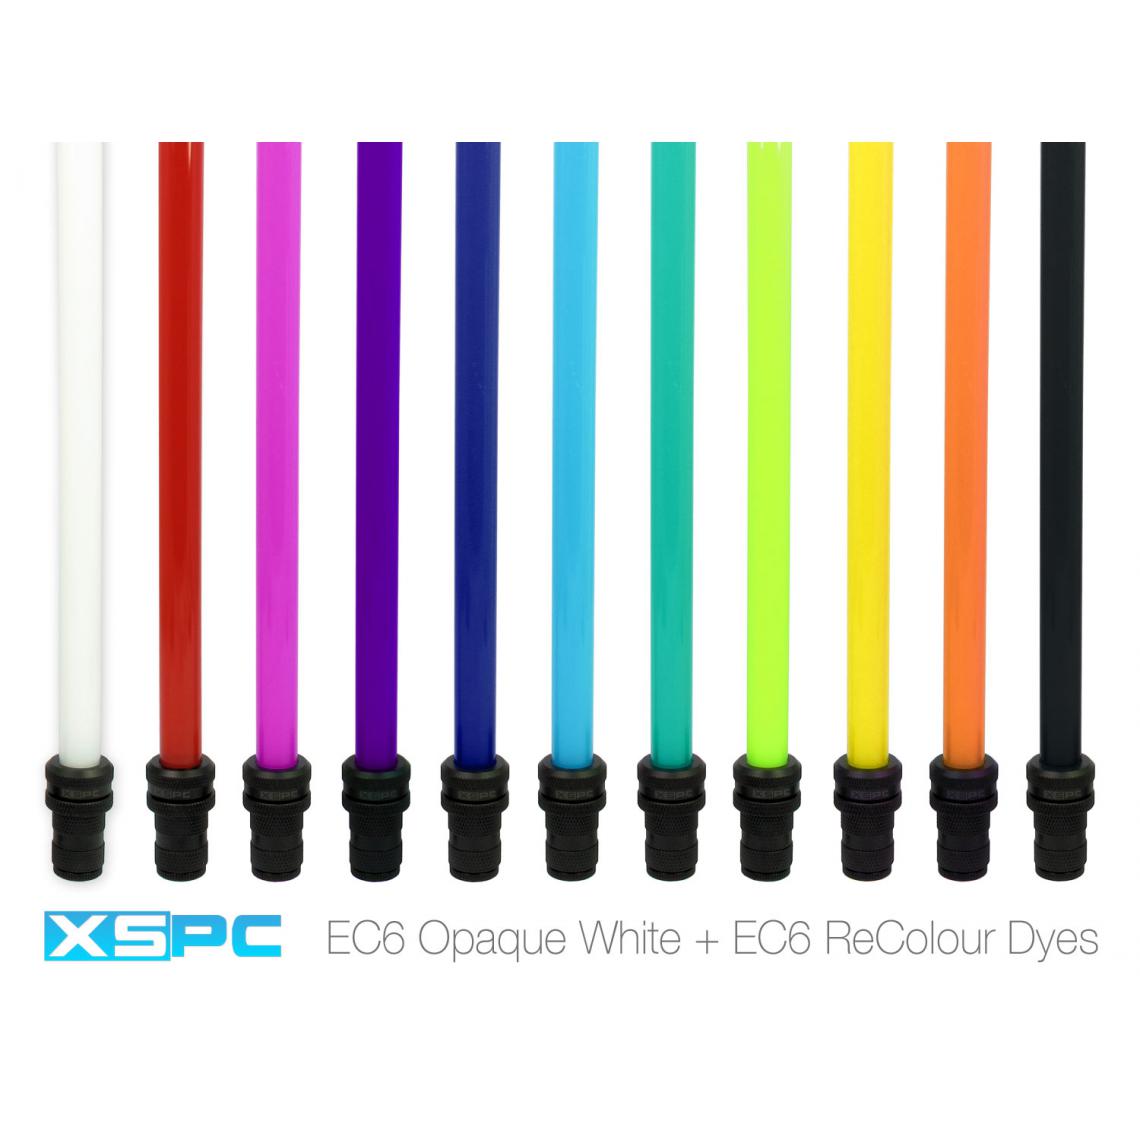 Xspc - EC6 recoloration colorant - Ventirad carte graphique